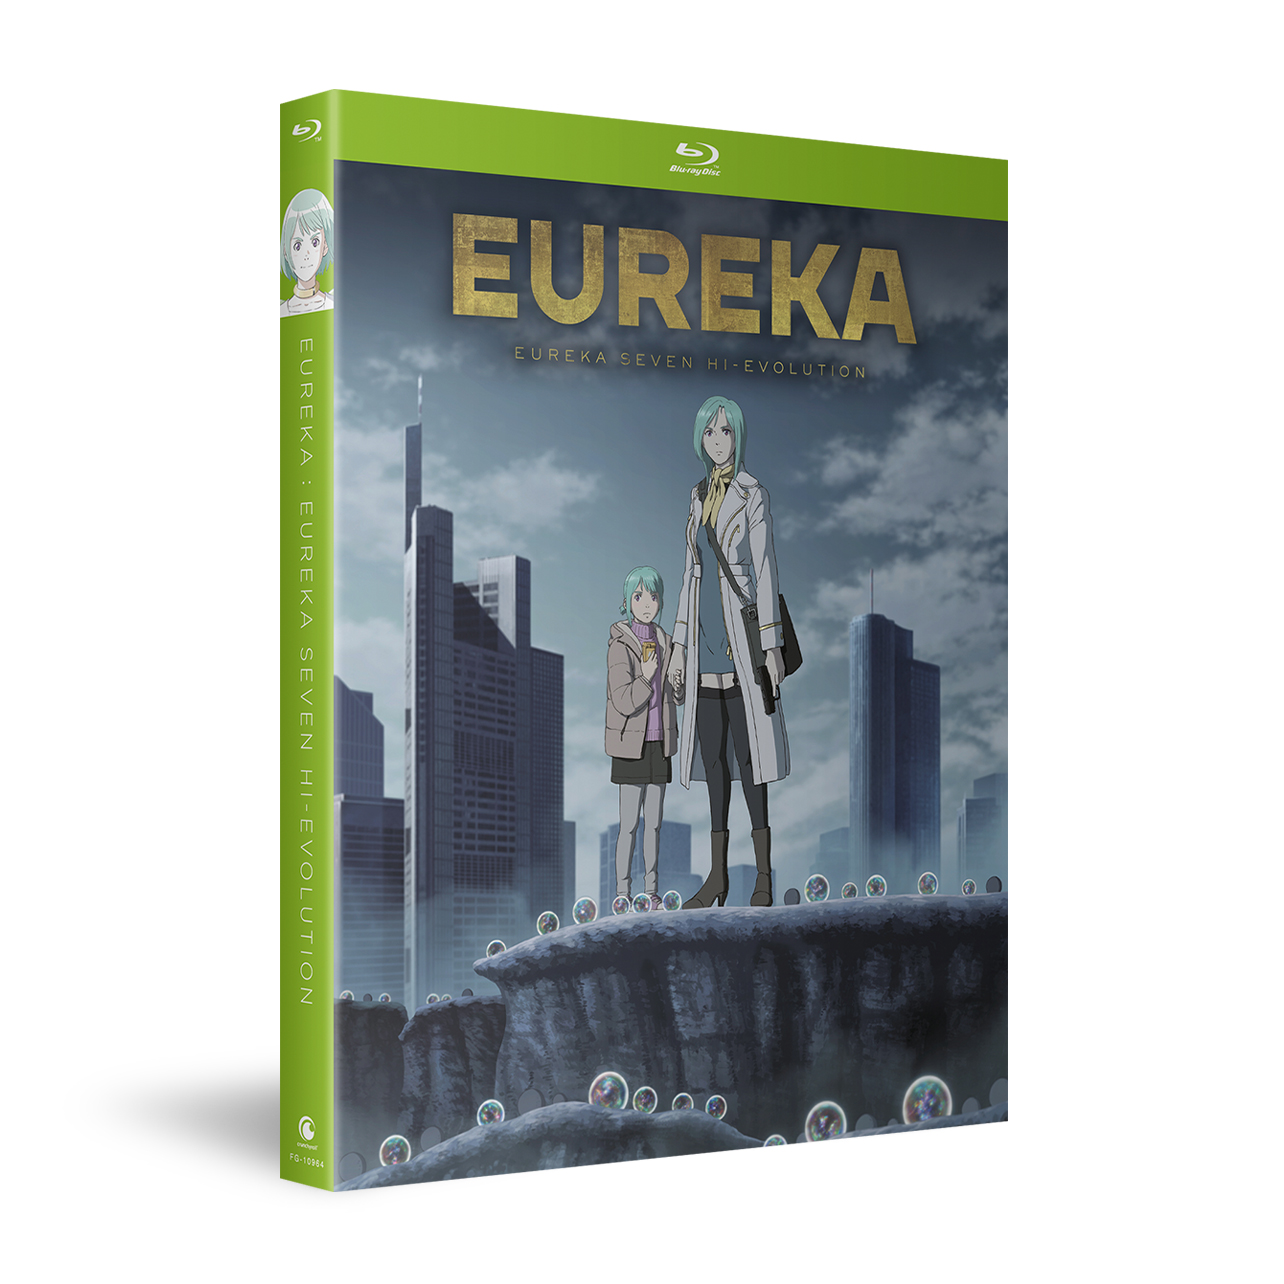 EUREKA: EUREKA SEVEN HI-EVOLUTION - Movie - Blu-ray image count 2